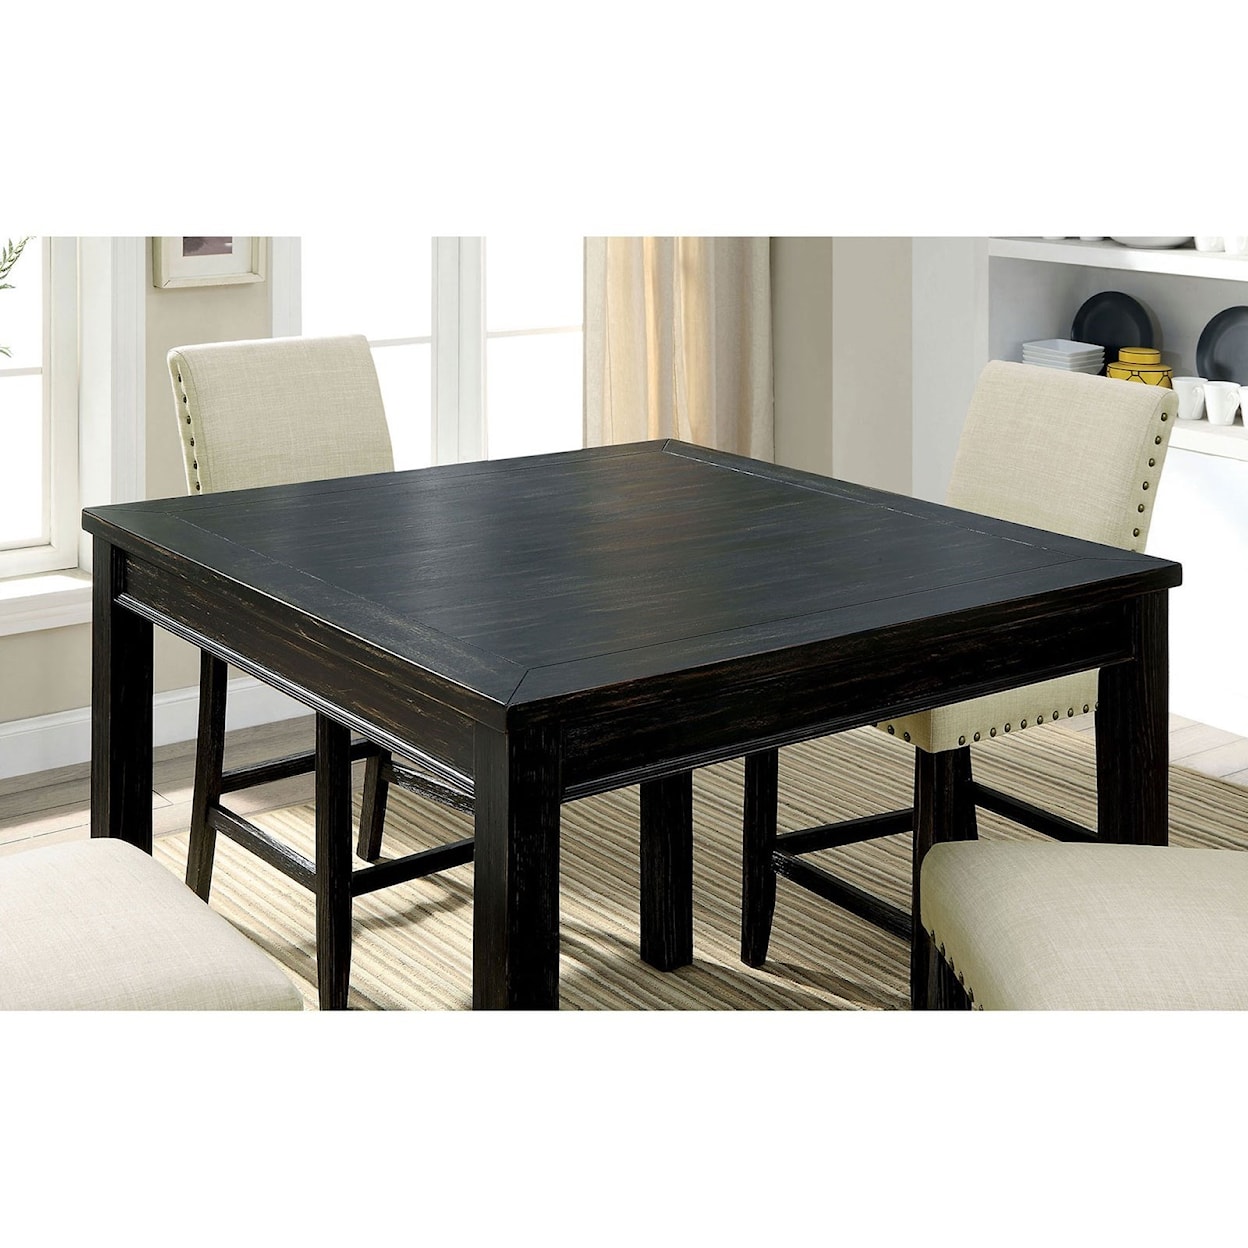 Furniture of America - FOA Kristie 5 Pc. Counter Ht. Table Set